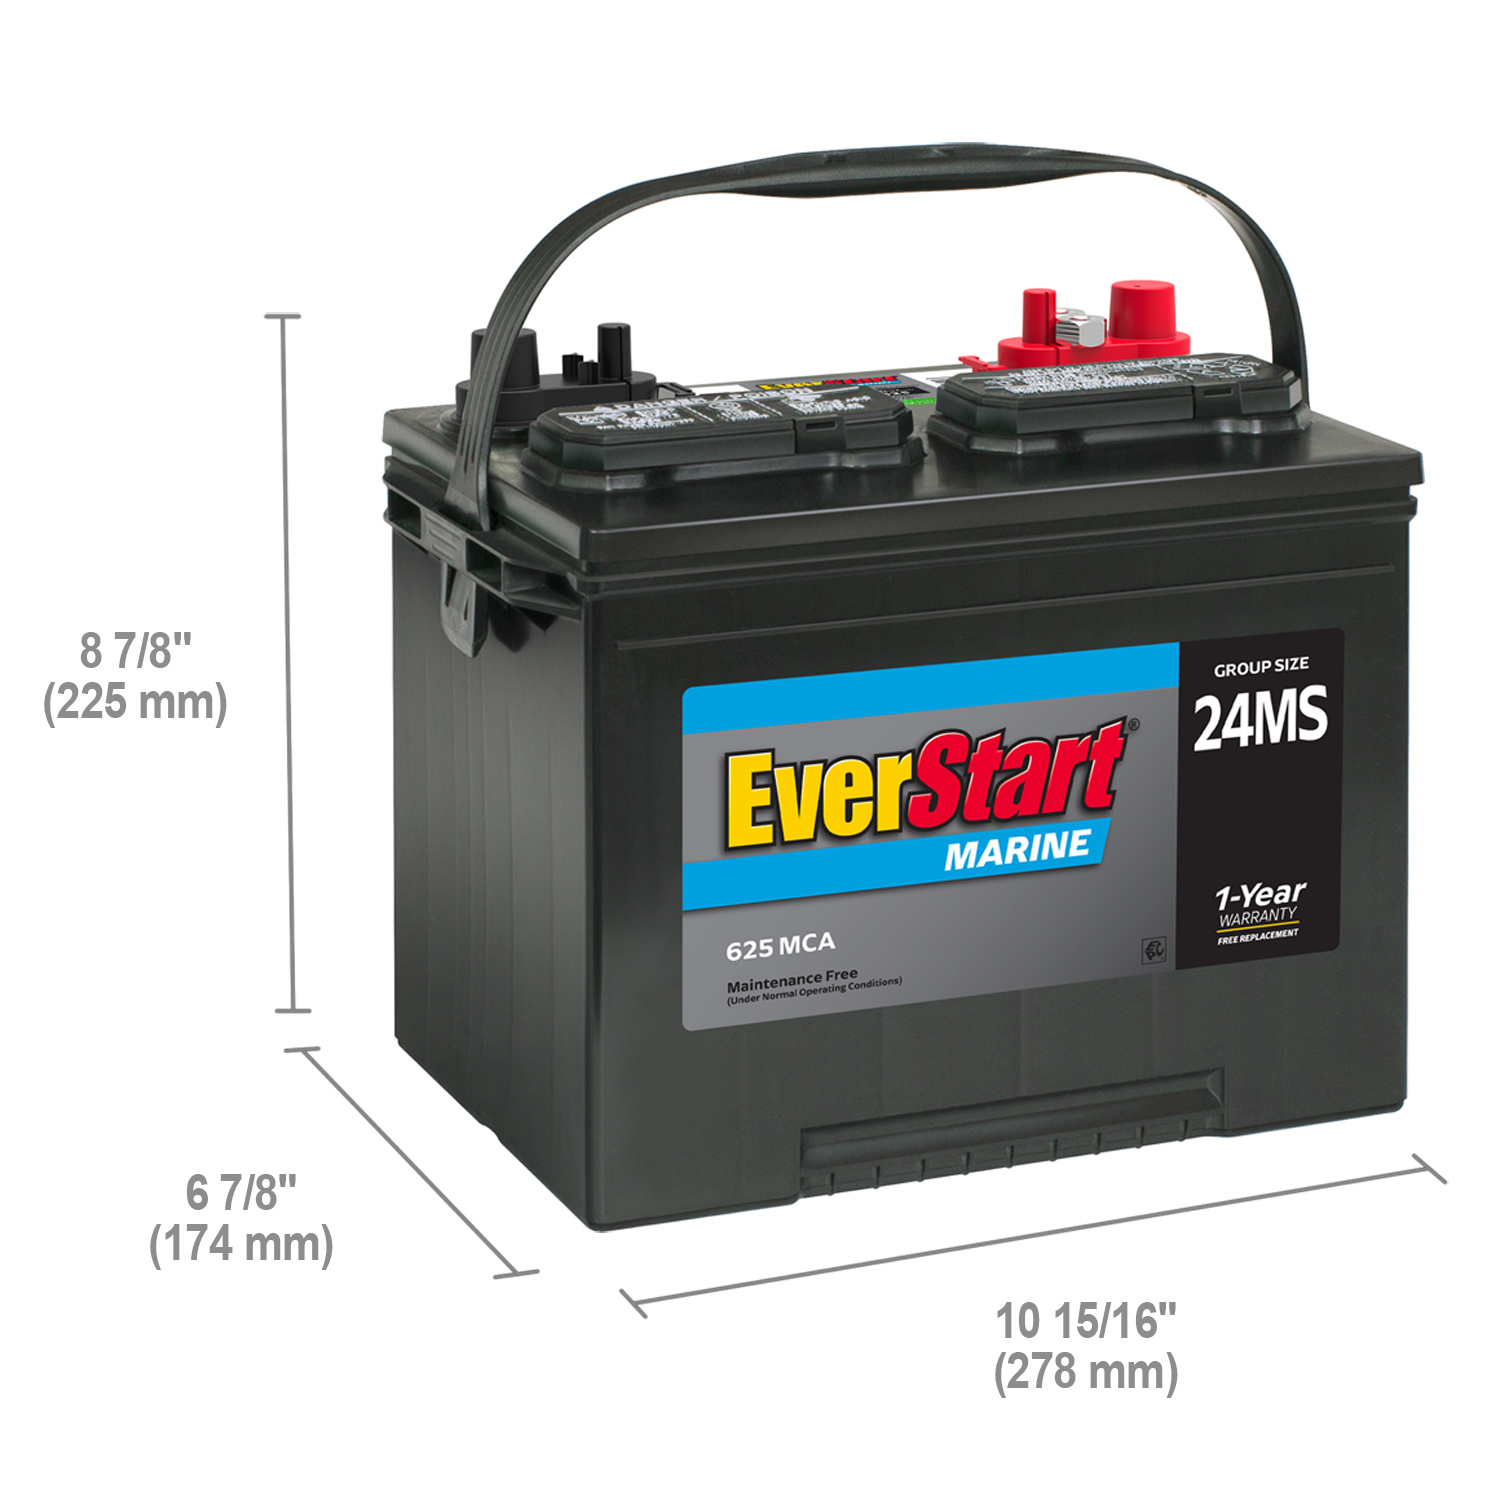 EverStart Lead Acid Marine Starting Battery, Group Size 24MS 12 Volt, 1000 MCA - image 3 of 9